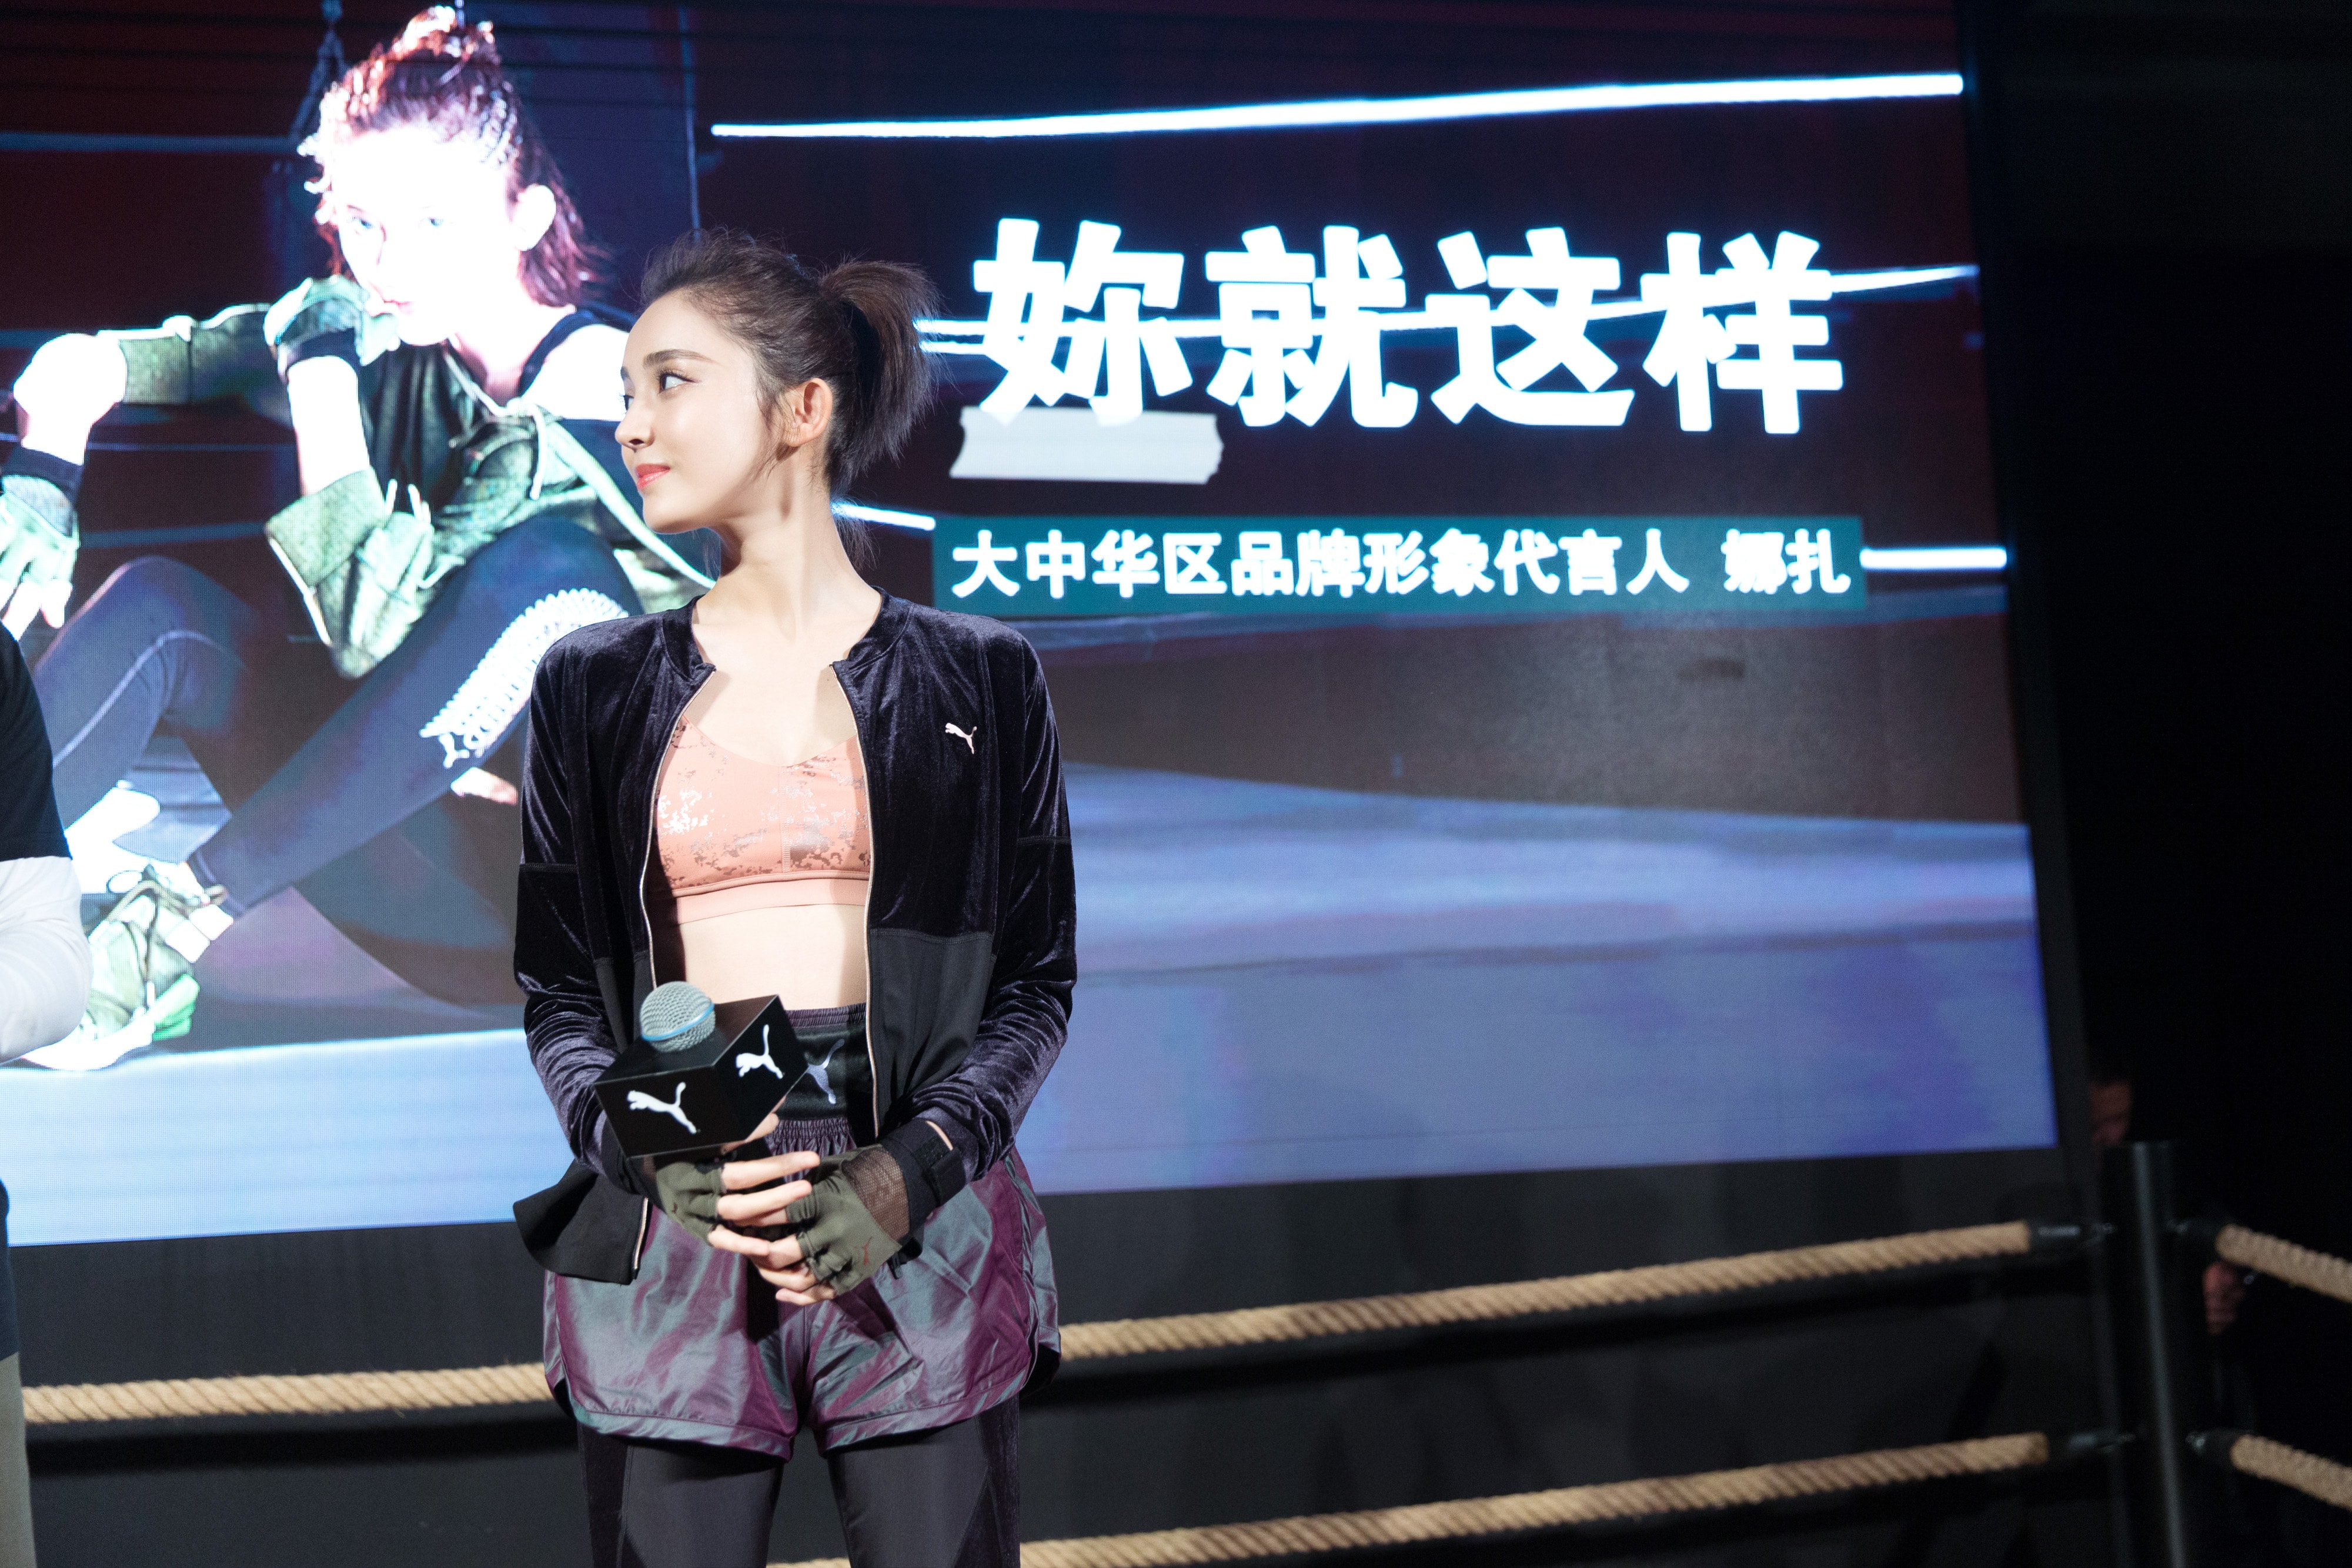 PUMA 宣布娜扎出任大中华区品牌代言人